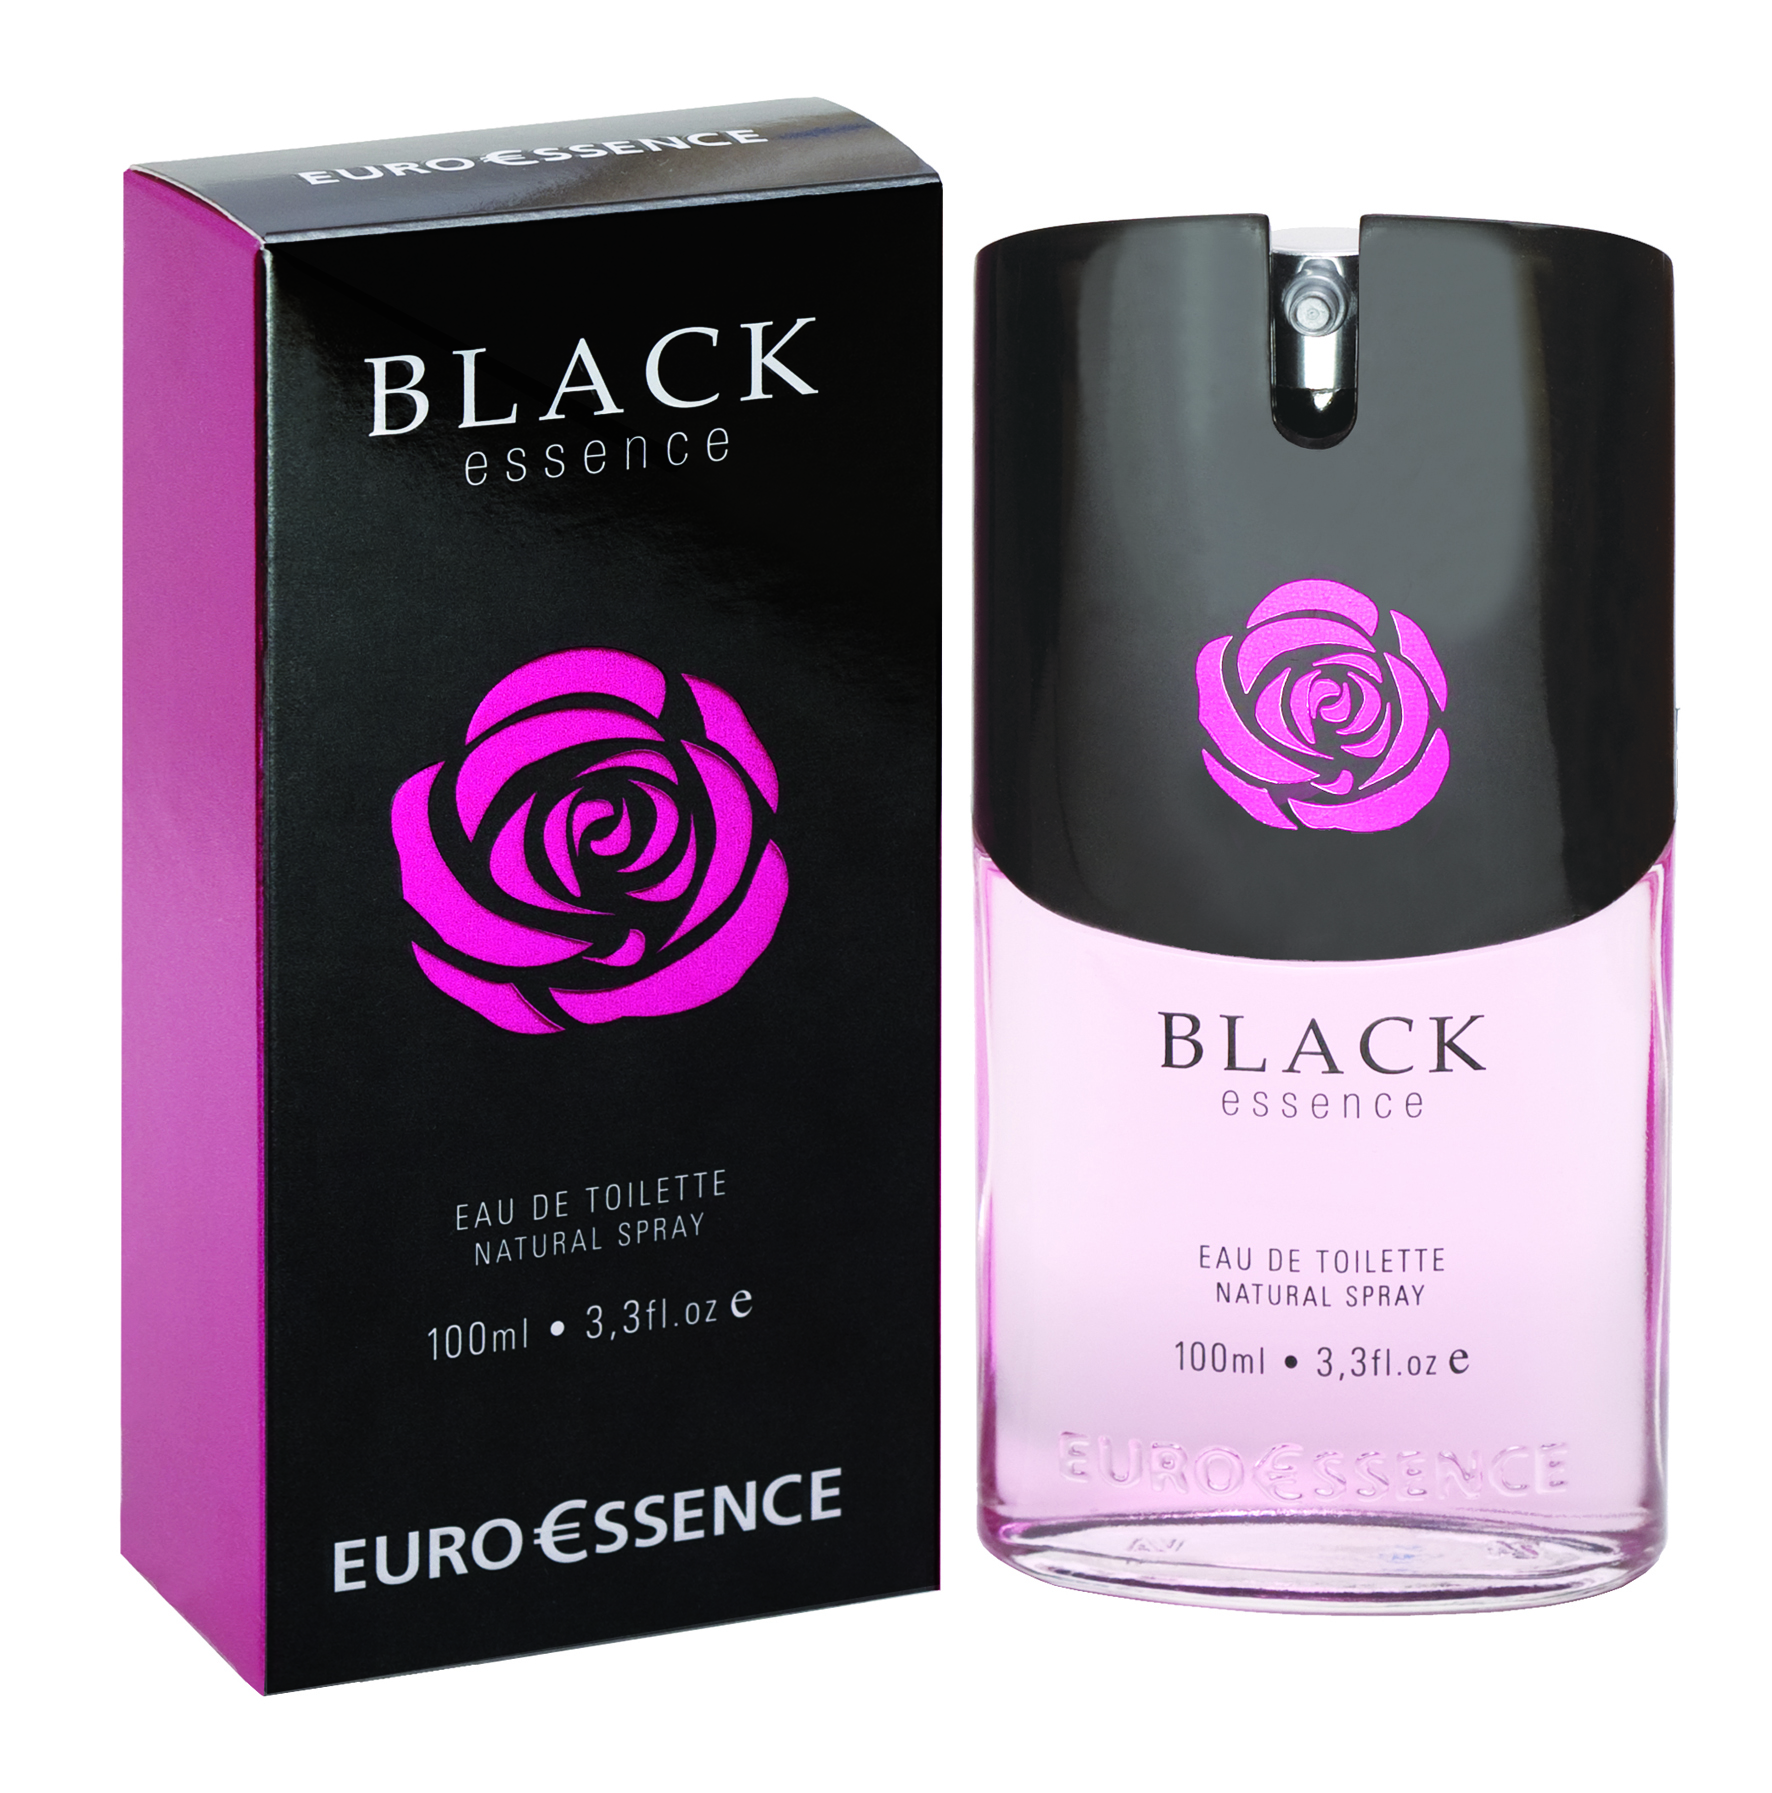 Perfume Black EuroEssence Essence - 100ml - Autentica